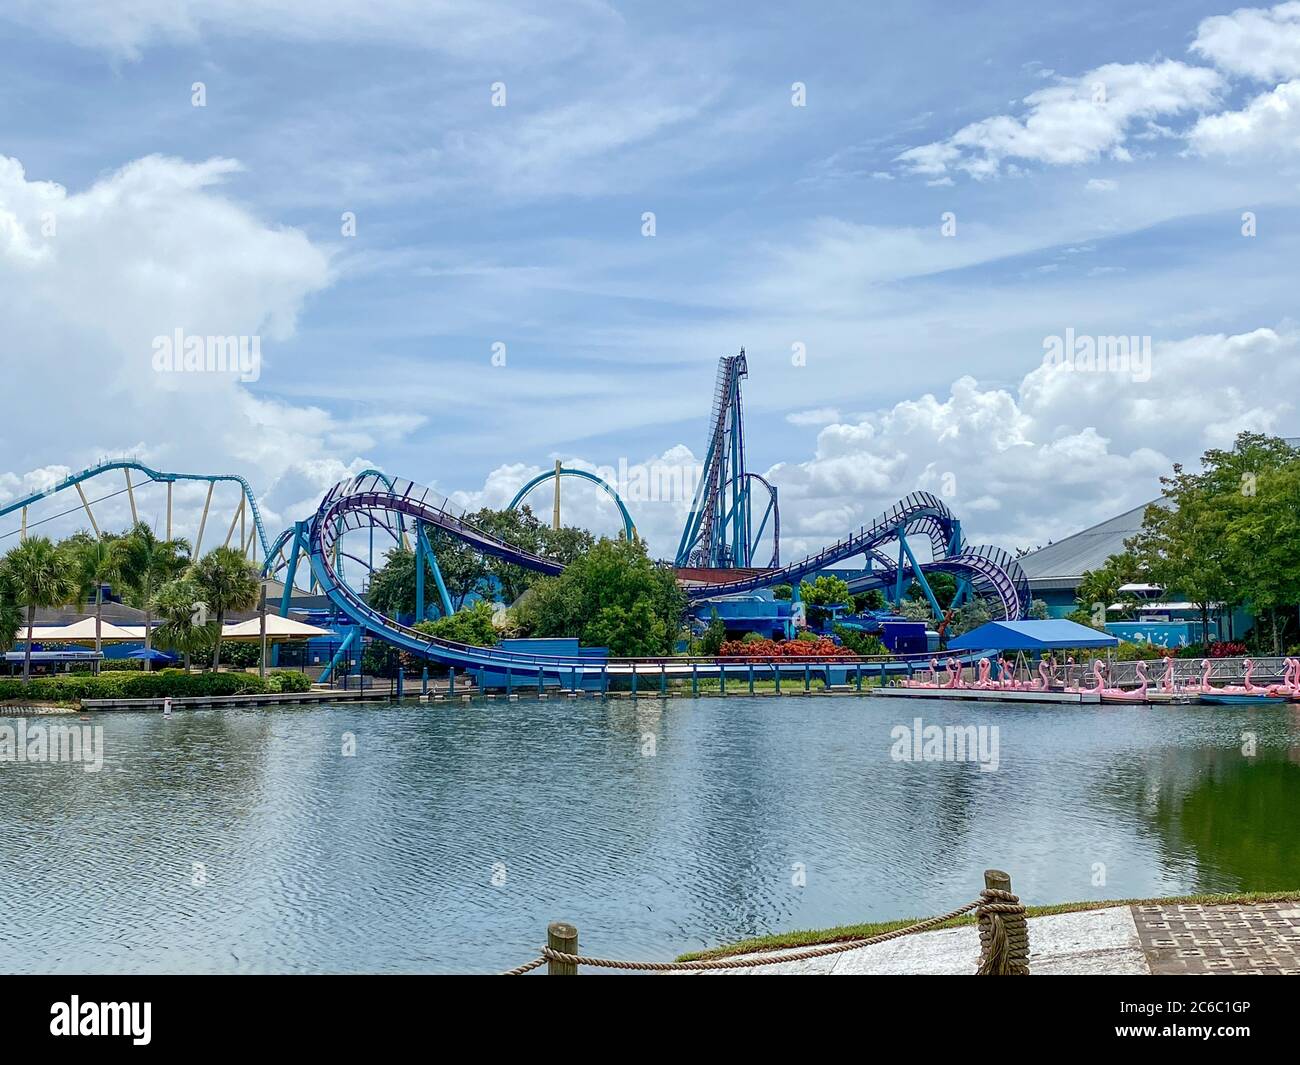 Orlando, FL/USA-7/3/20: A landscape view of the rollercoasters at Seaworld in Orlando, Florida. Stock Photo